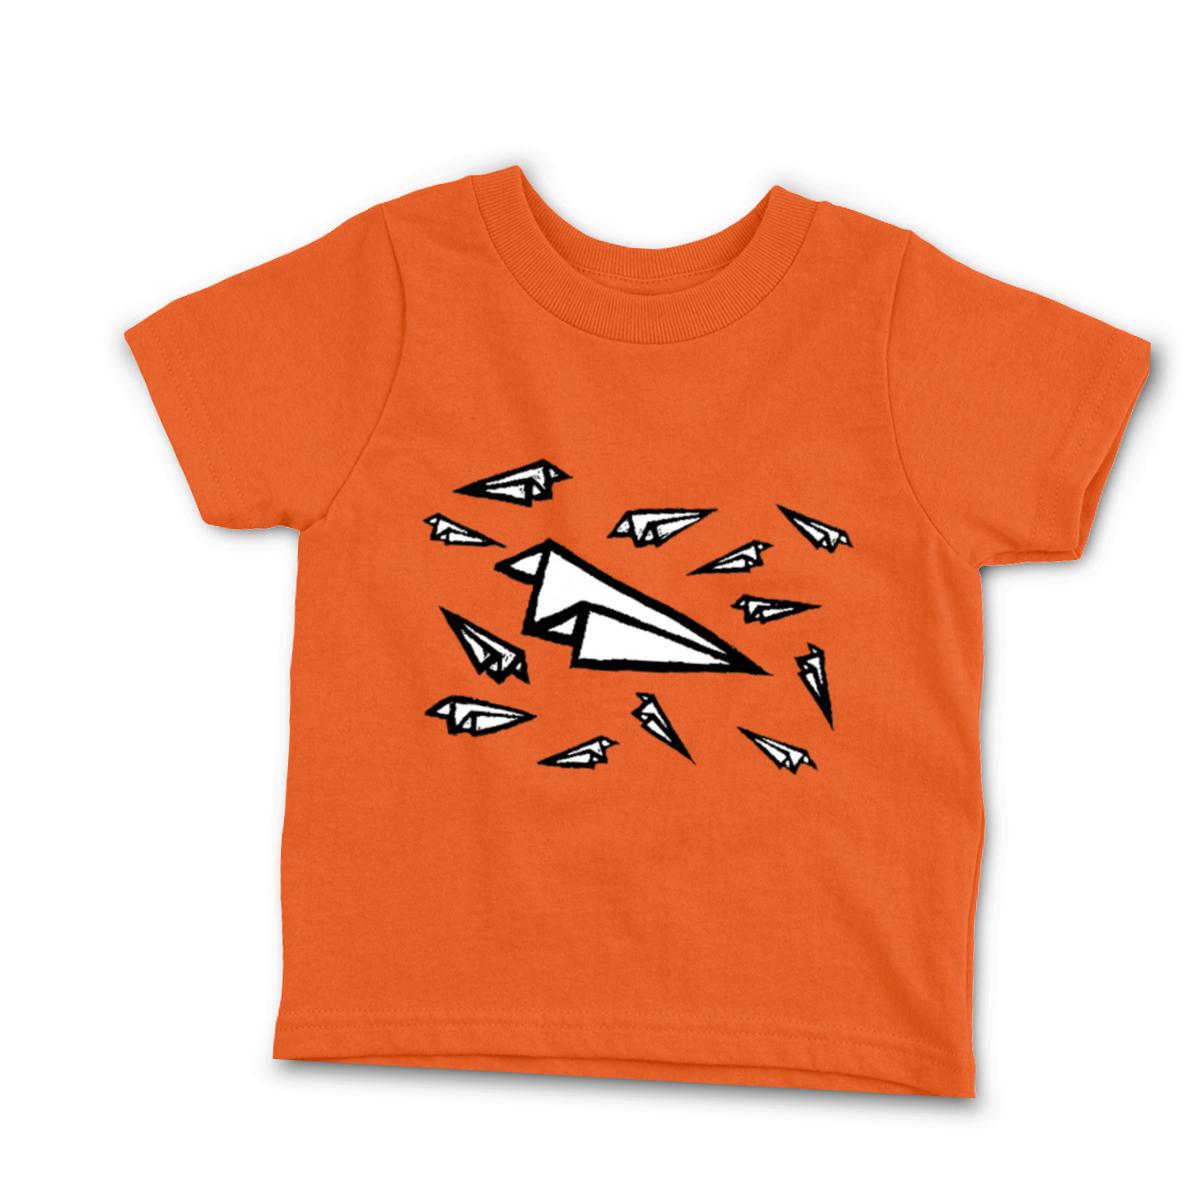 Airplane Frenzy Infant Tee 18M orange